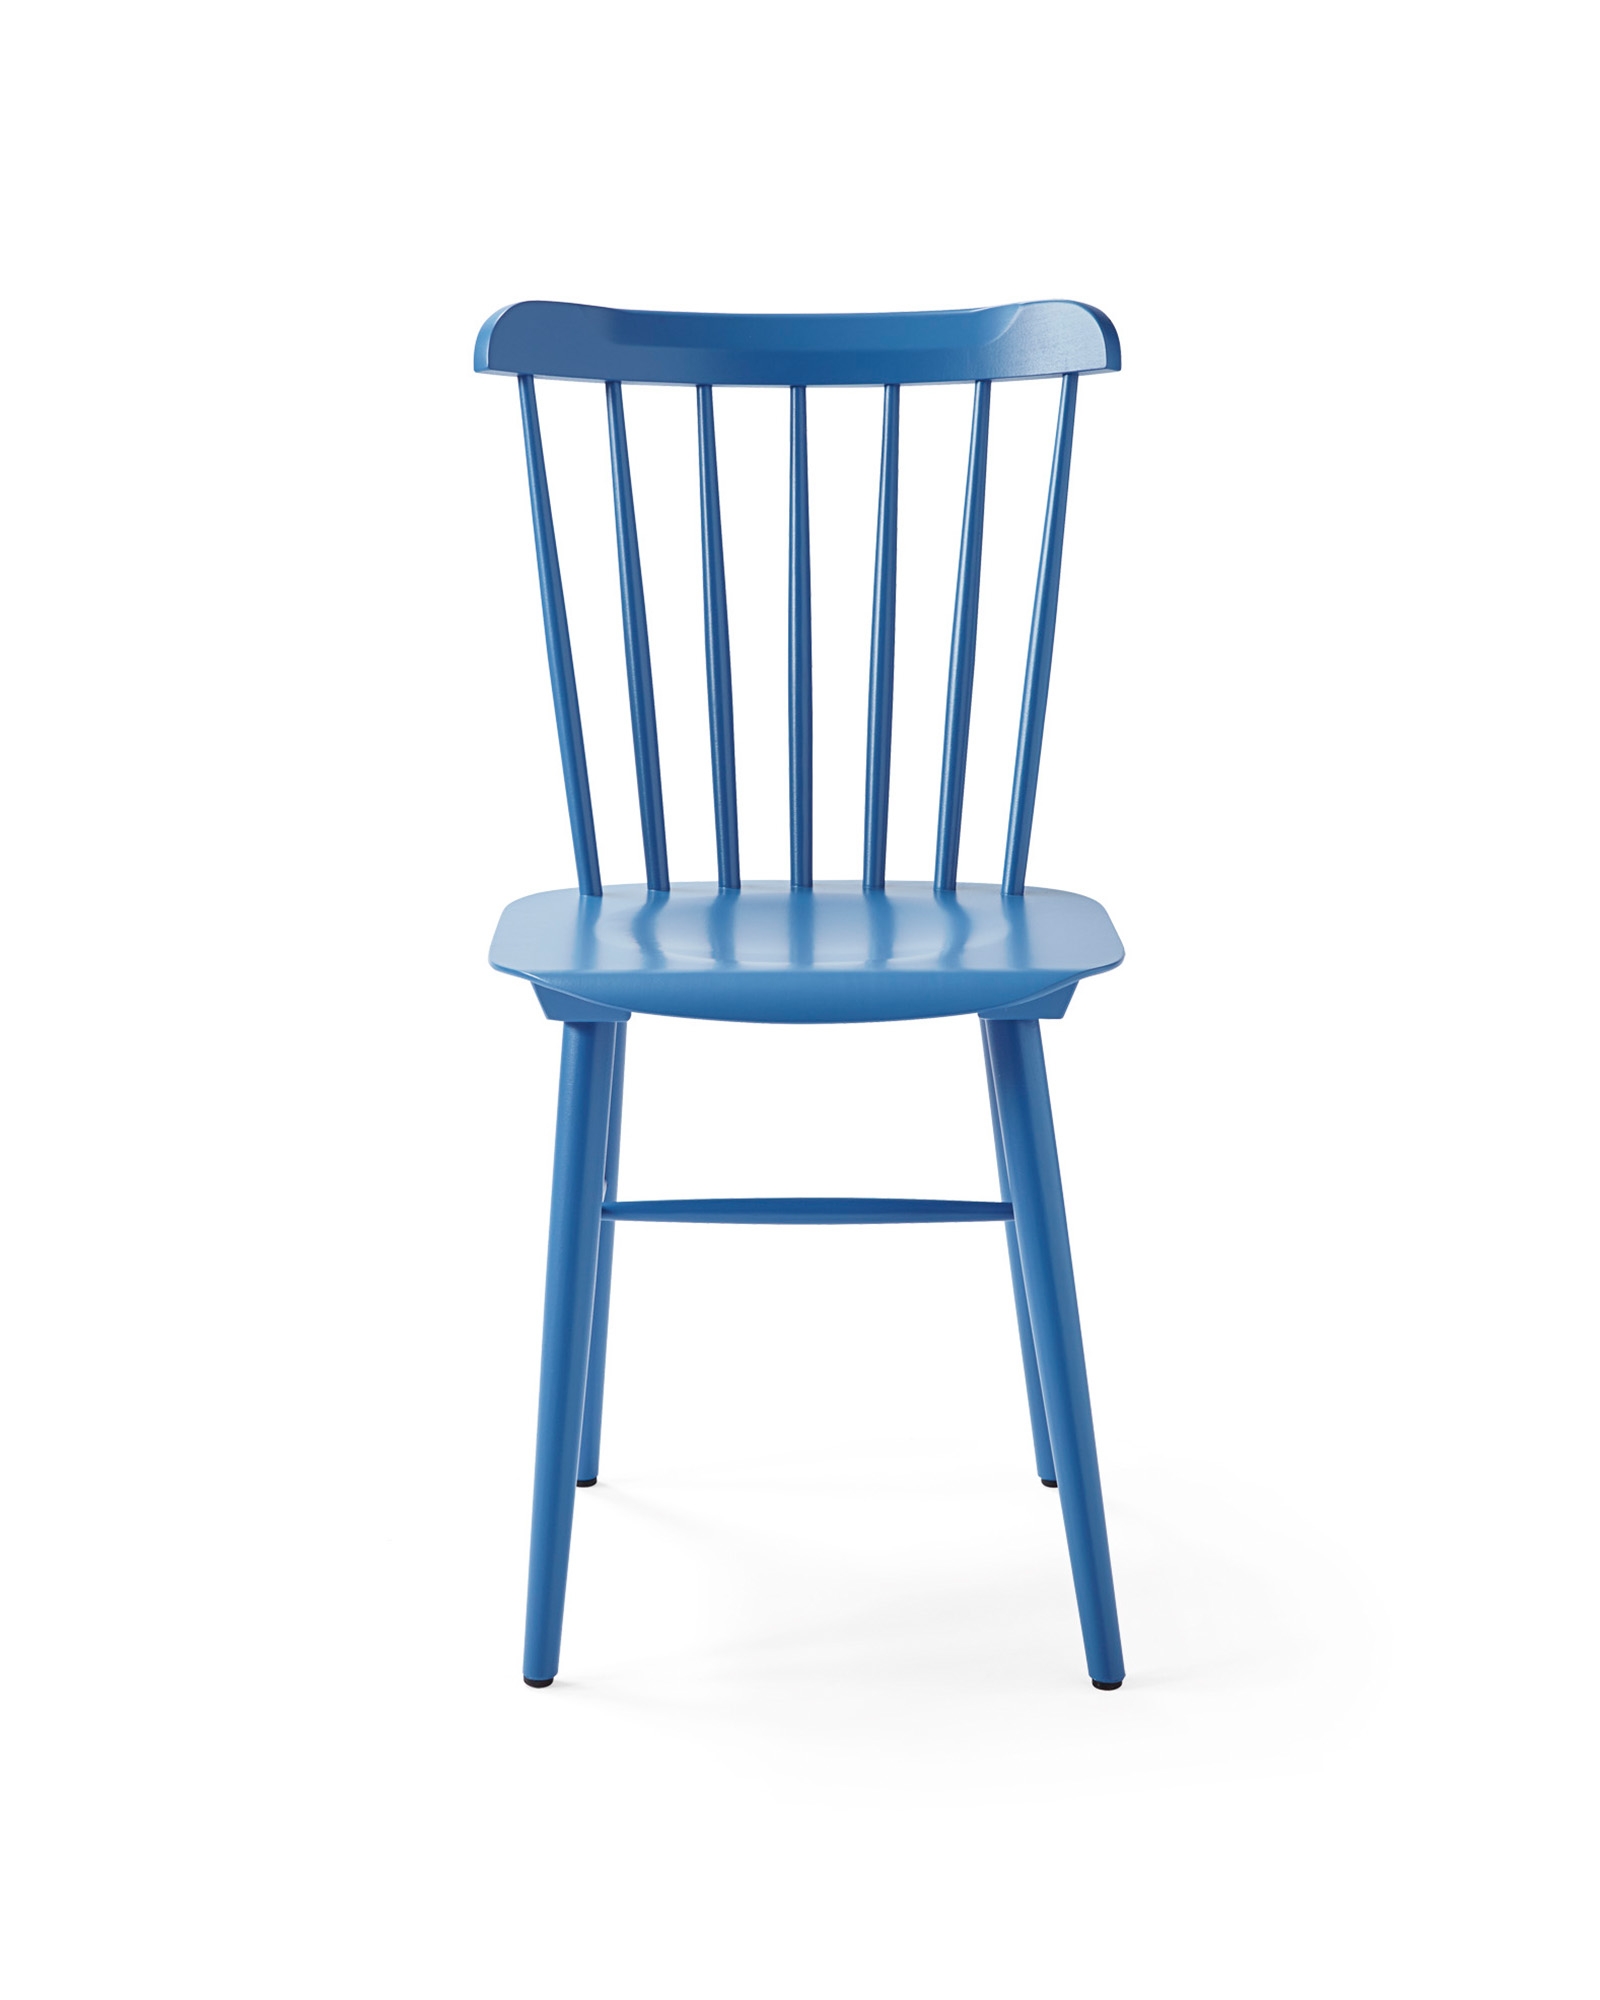 Tucker Chair - Harbor - Image 2